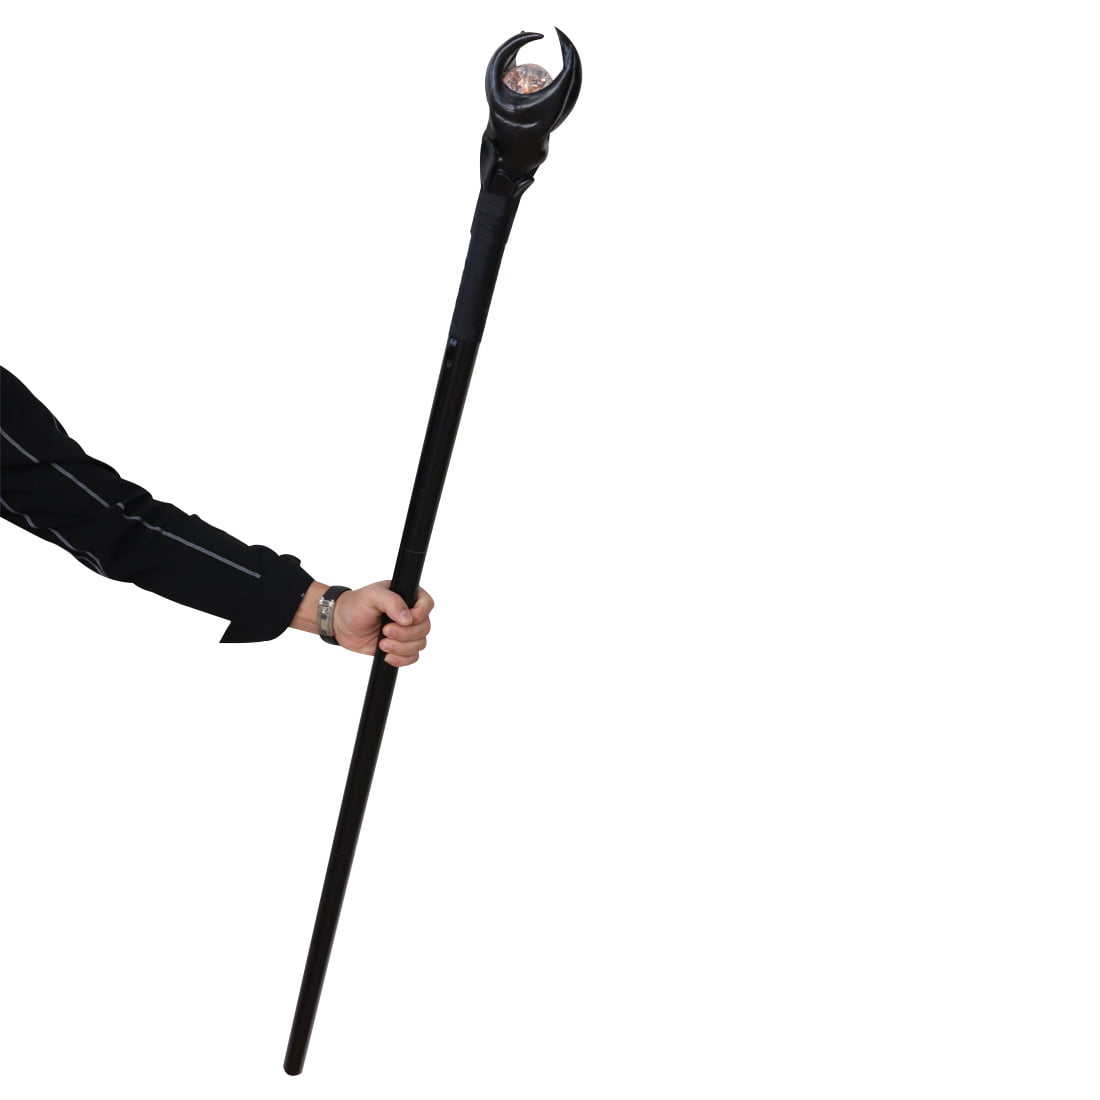 Rambler uses a wand